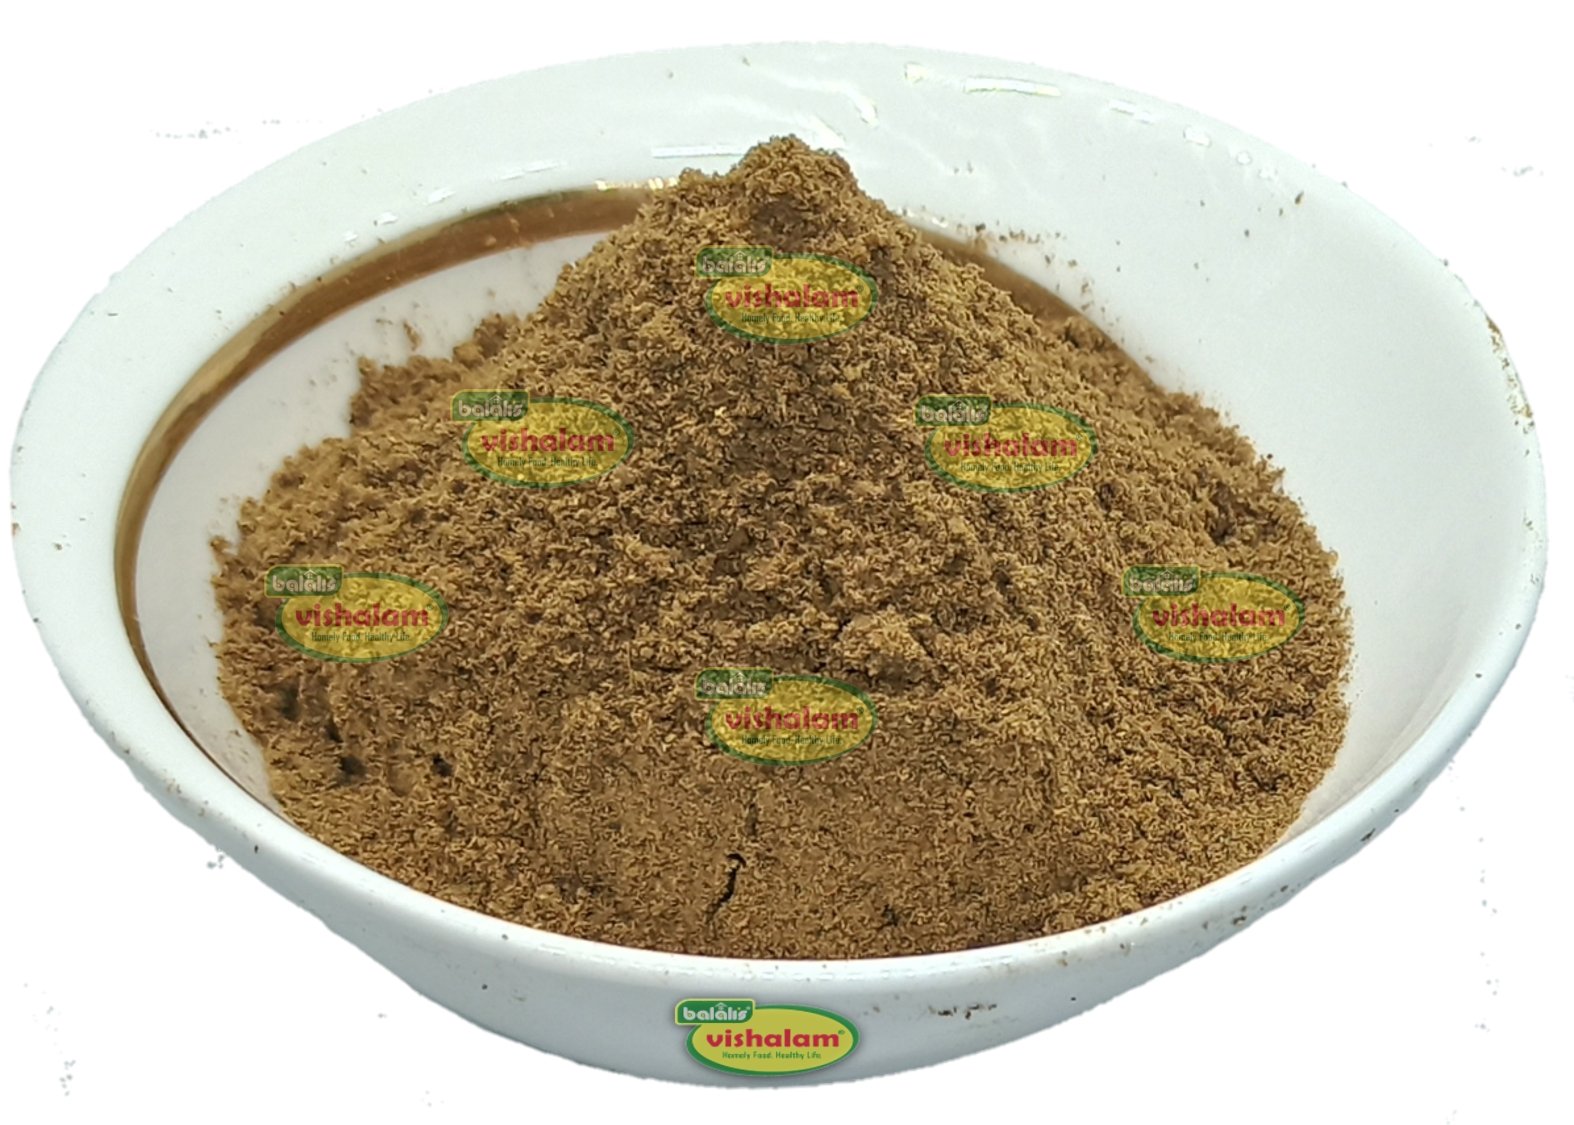 Angaya Podi (Herbal Rice Mix) - Balali's Vishalam